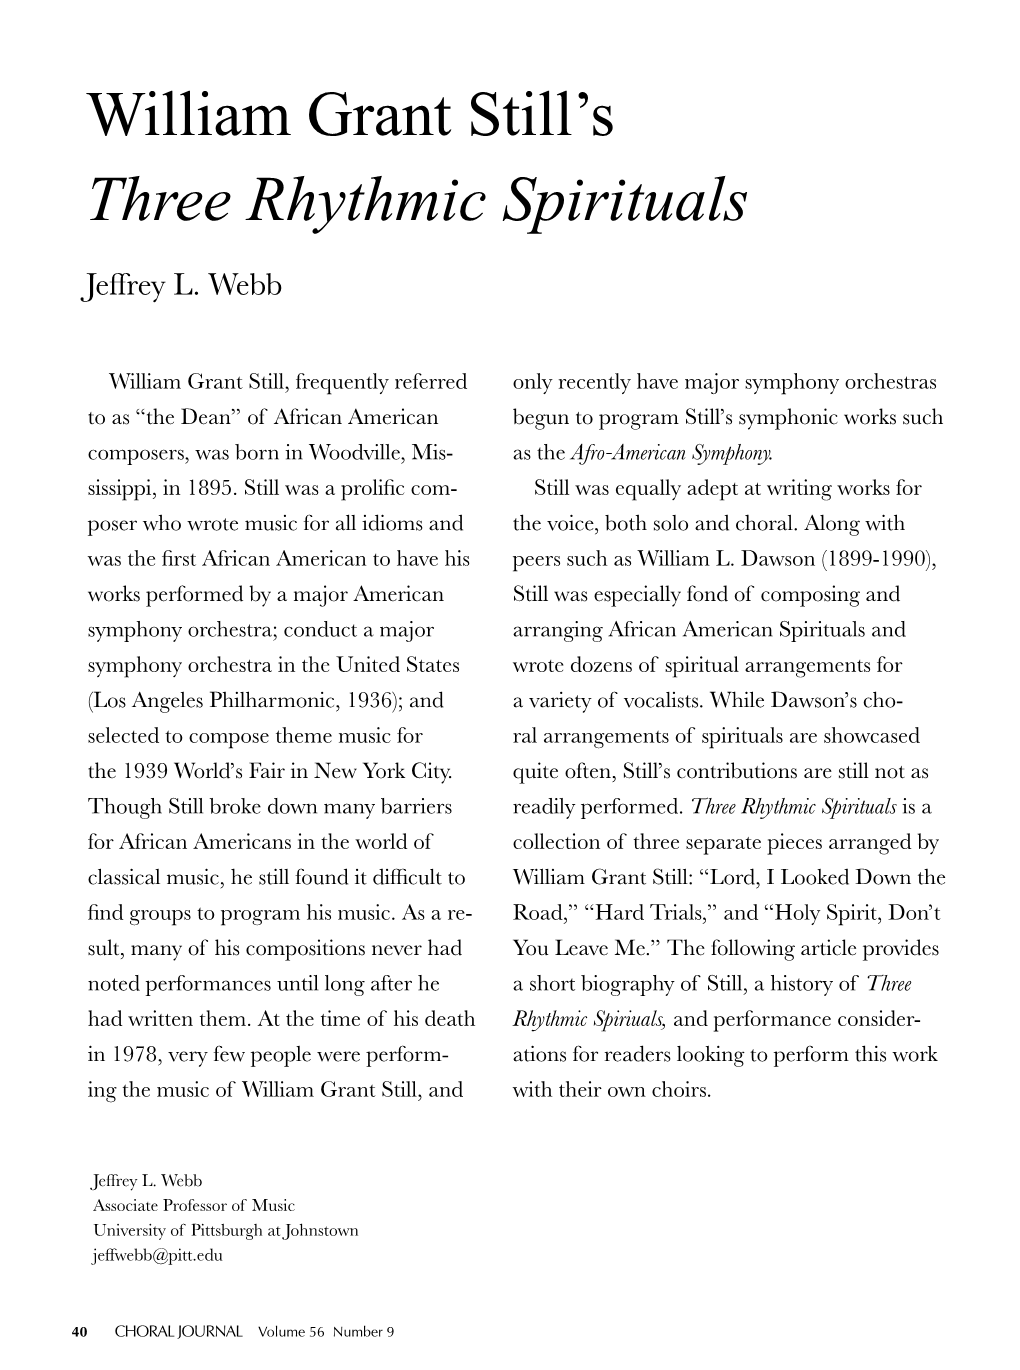 William Grant Still's Three Rhythmic Spirituals